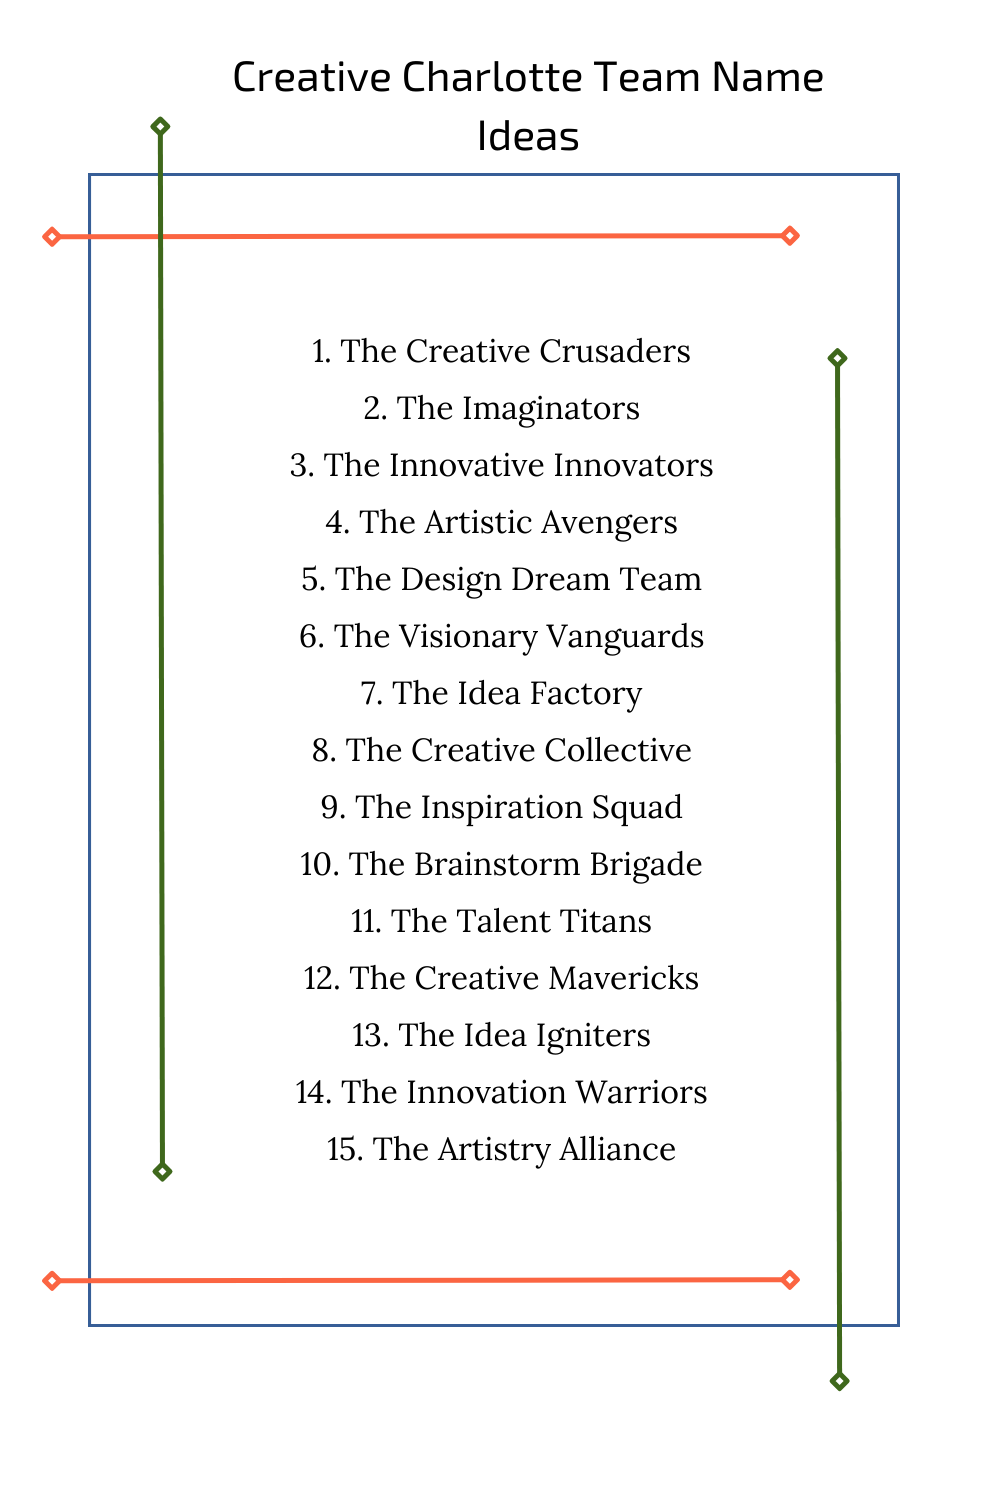 Creative Charlotte Team Name Ideas